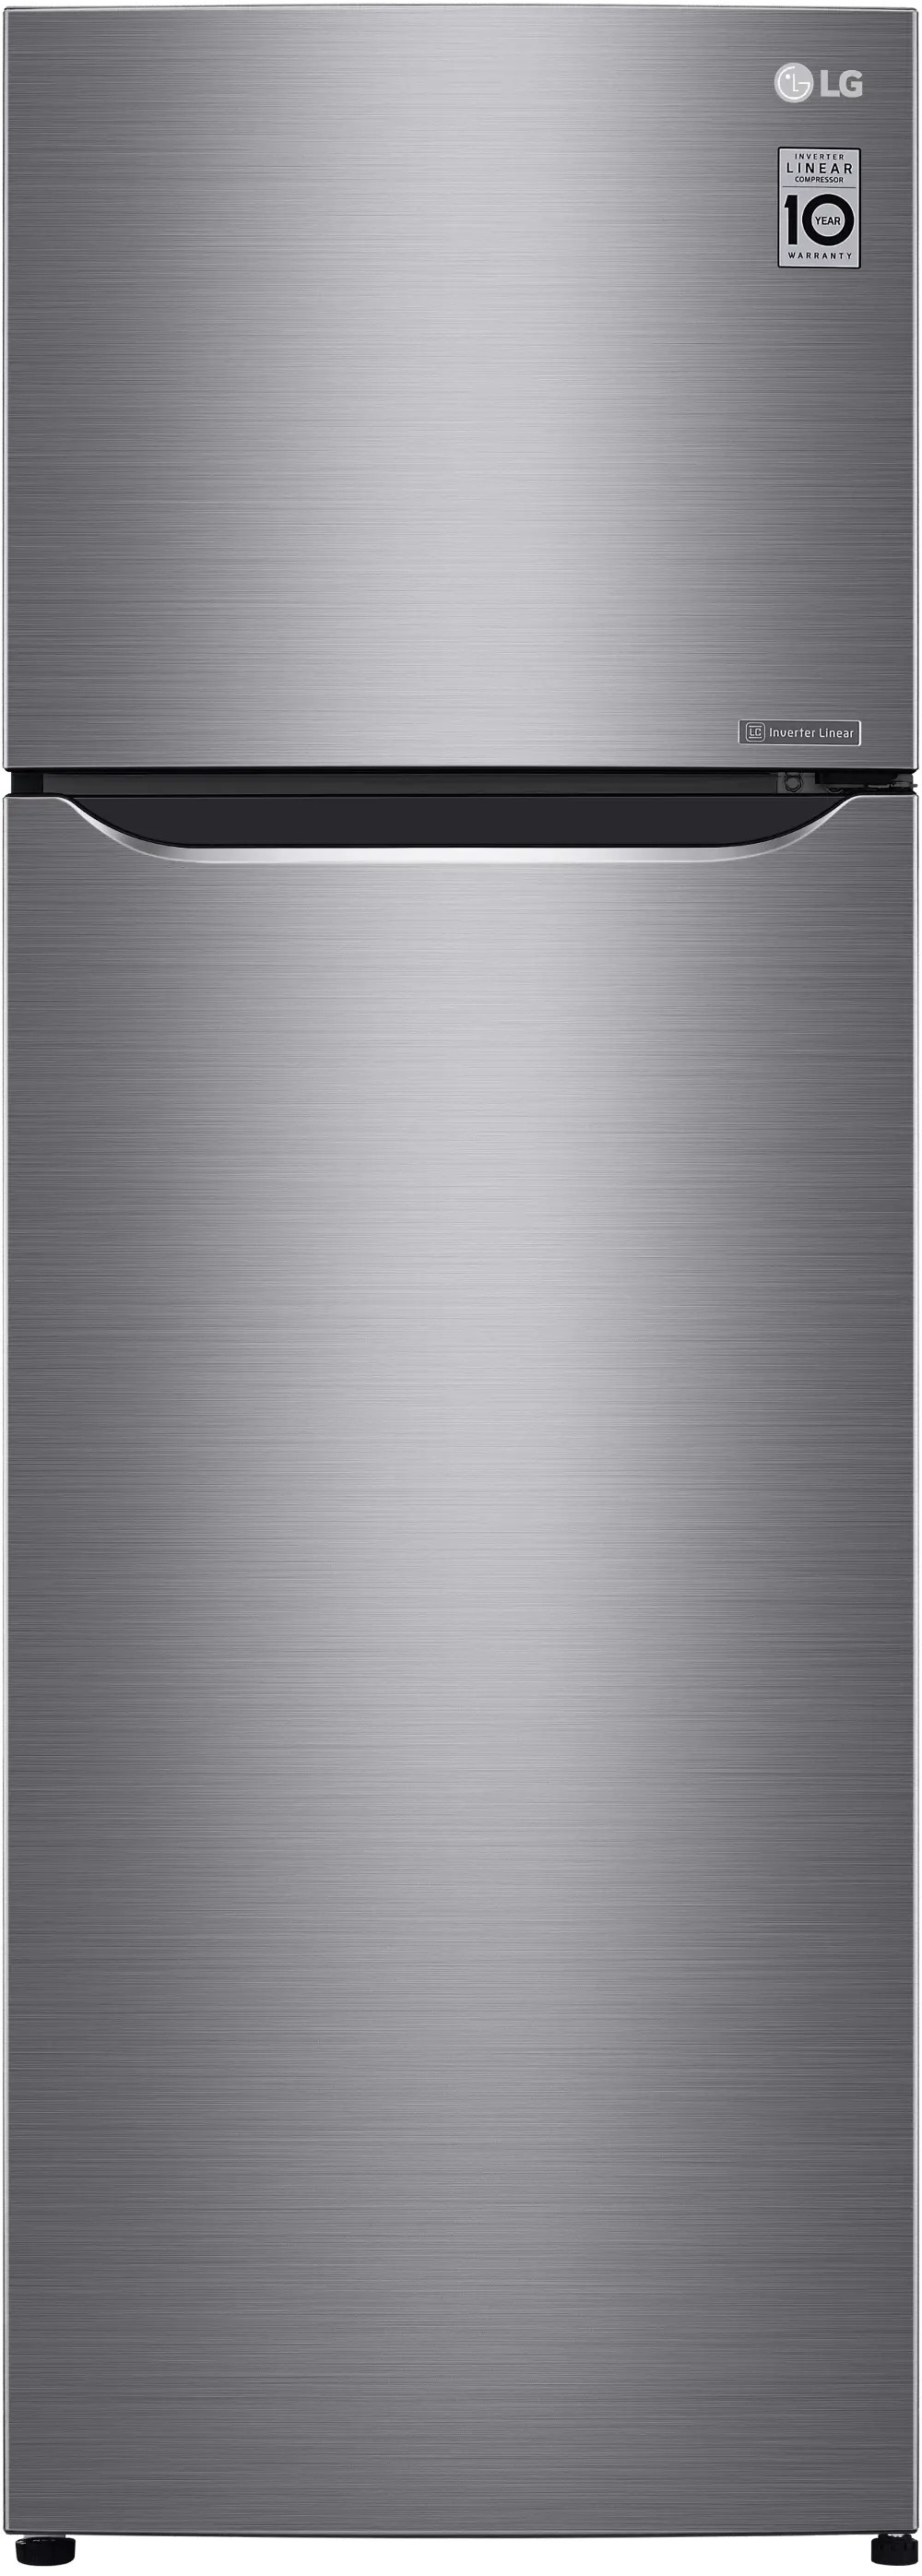 LTNC11131V LG 11 cu ft Top Freezer Refrigerator - 24 W Stainless Steel-1